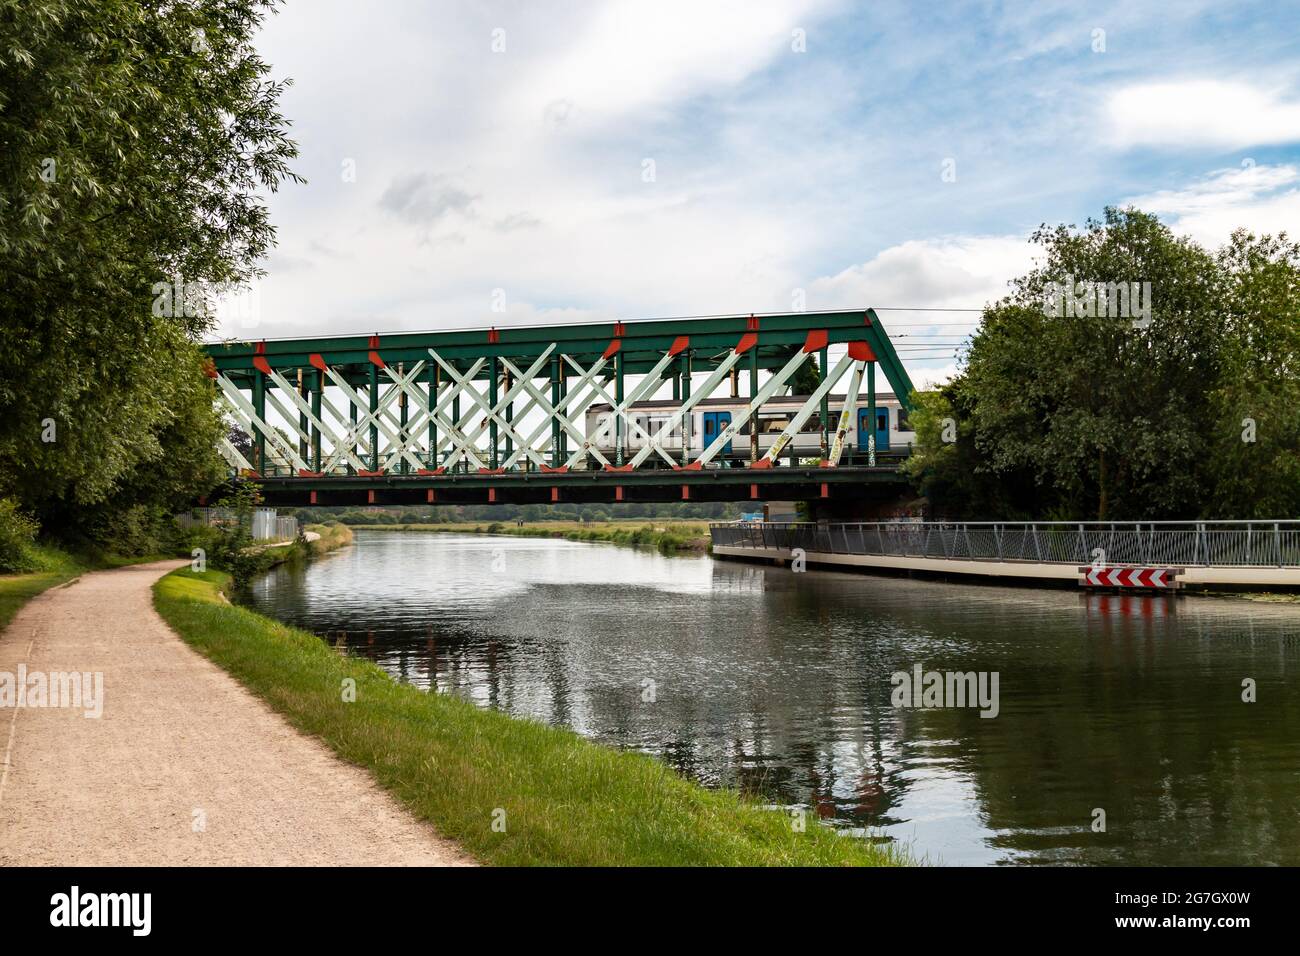 A train crosses the iron railway bridge over the River Cam at Stourbridge Common. Cambridge, UK. Stock Photo